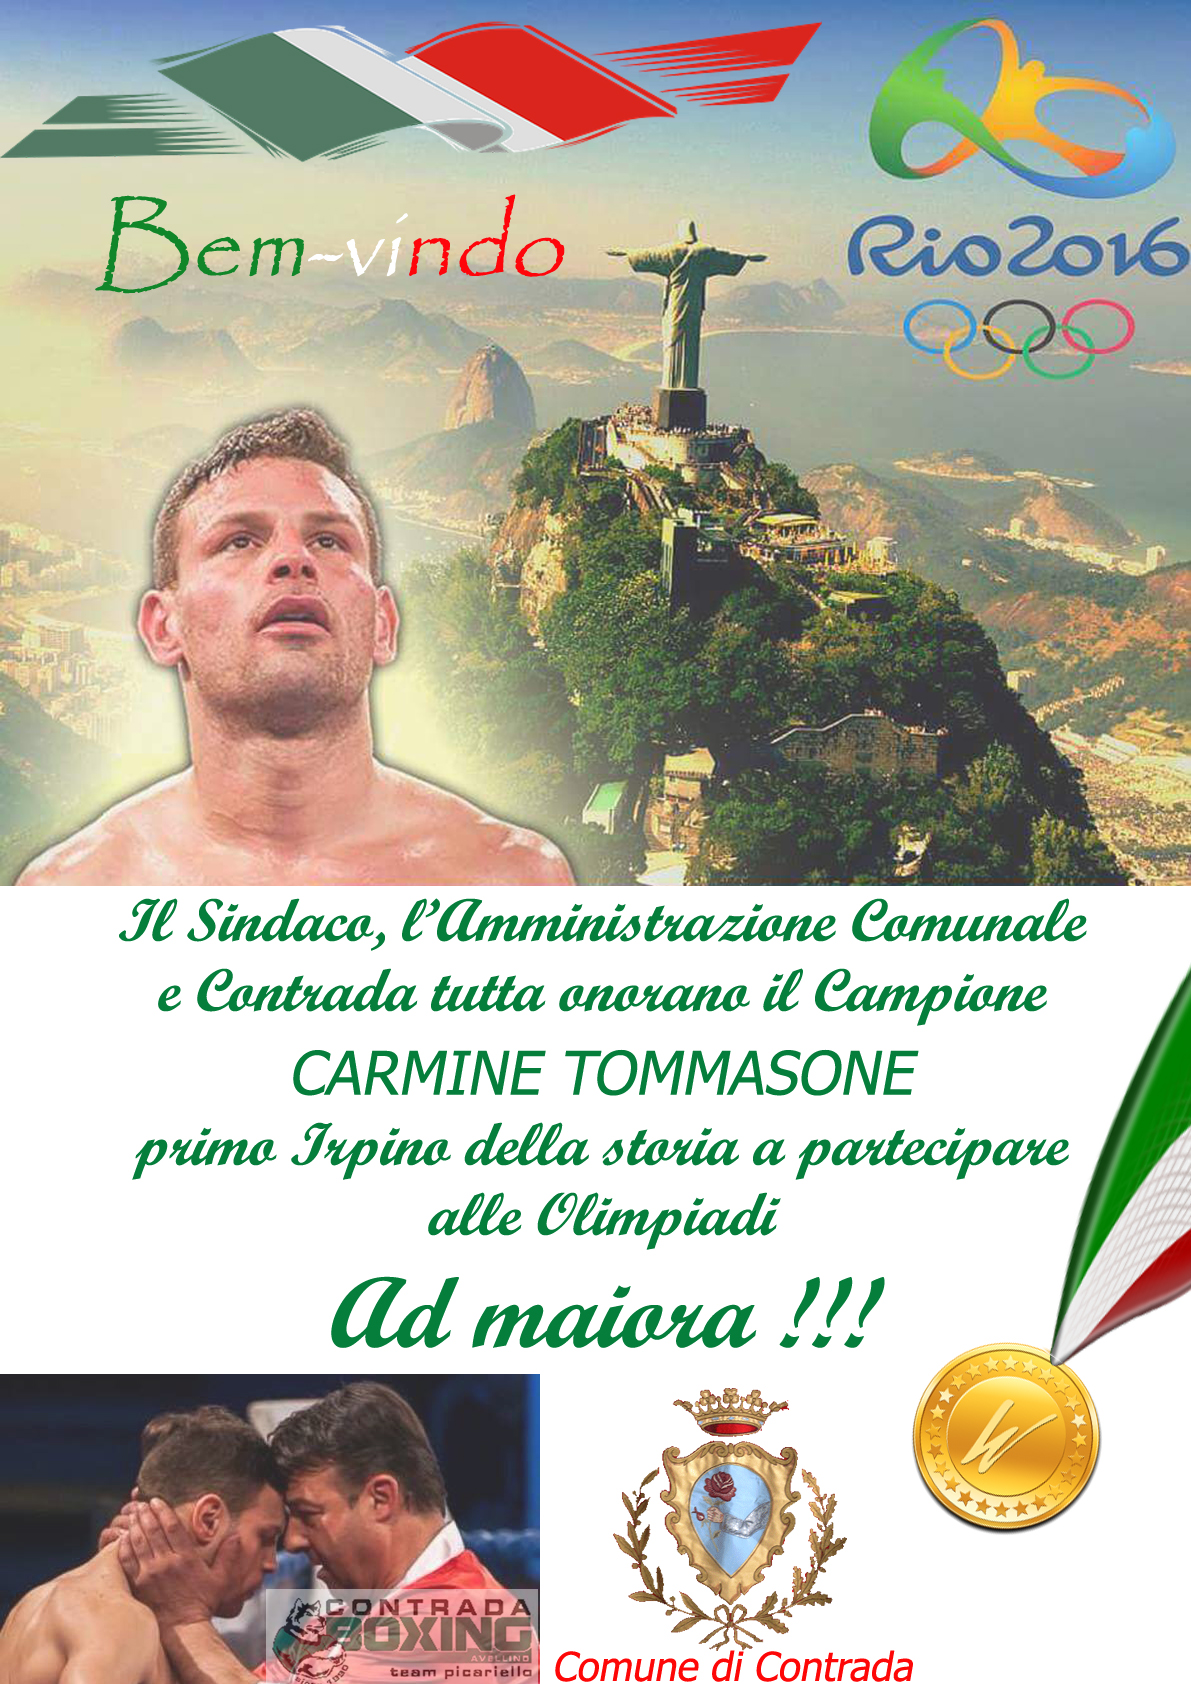 Bem-vindo Rio 2016 - Carmine Tommasone campione